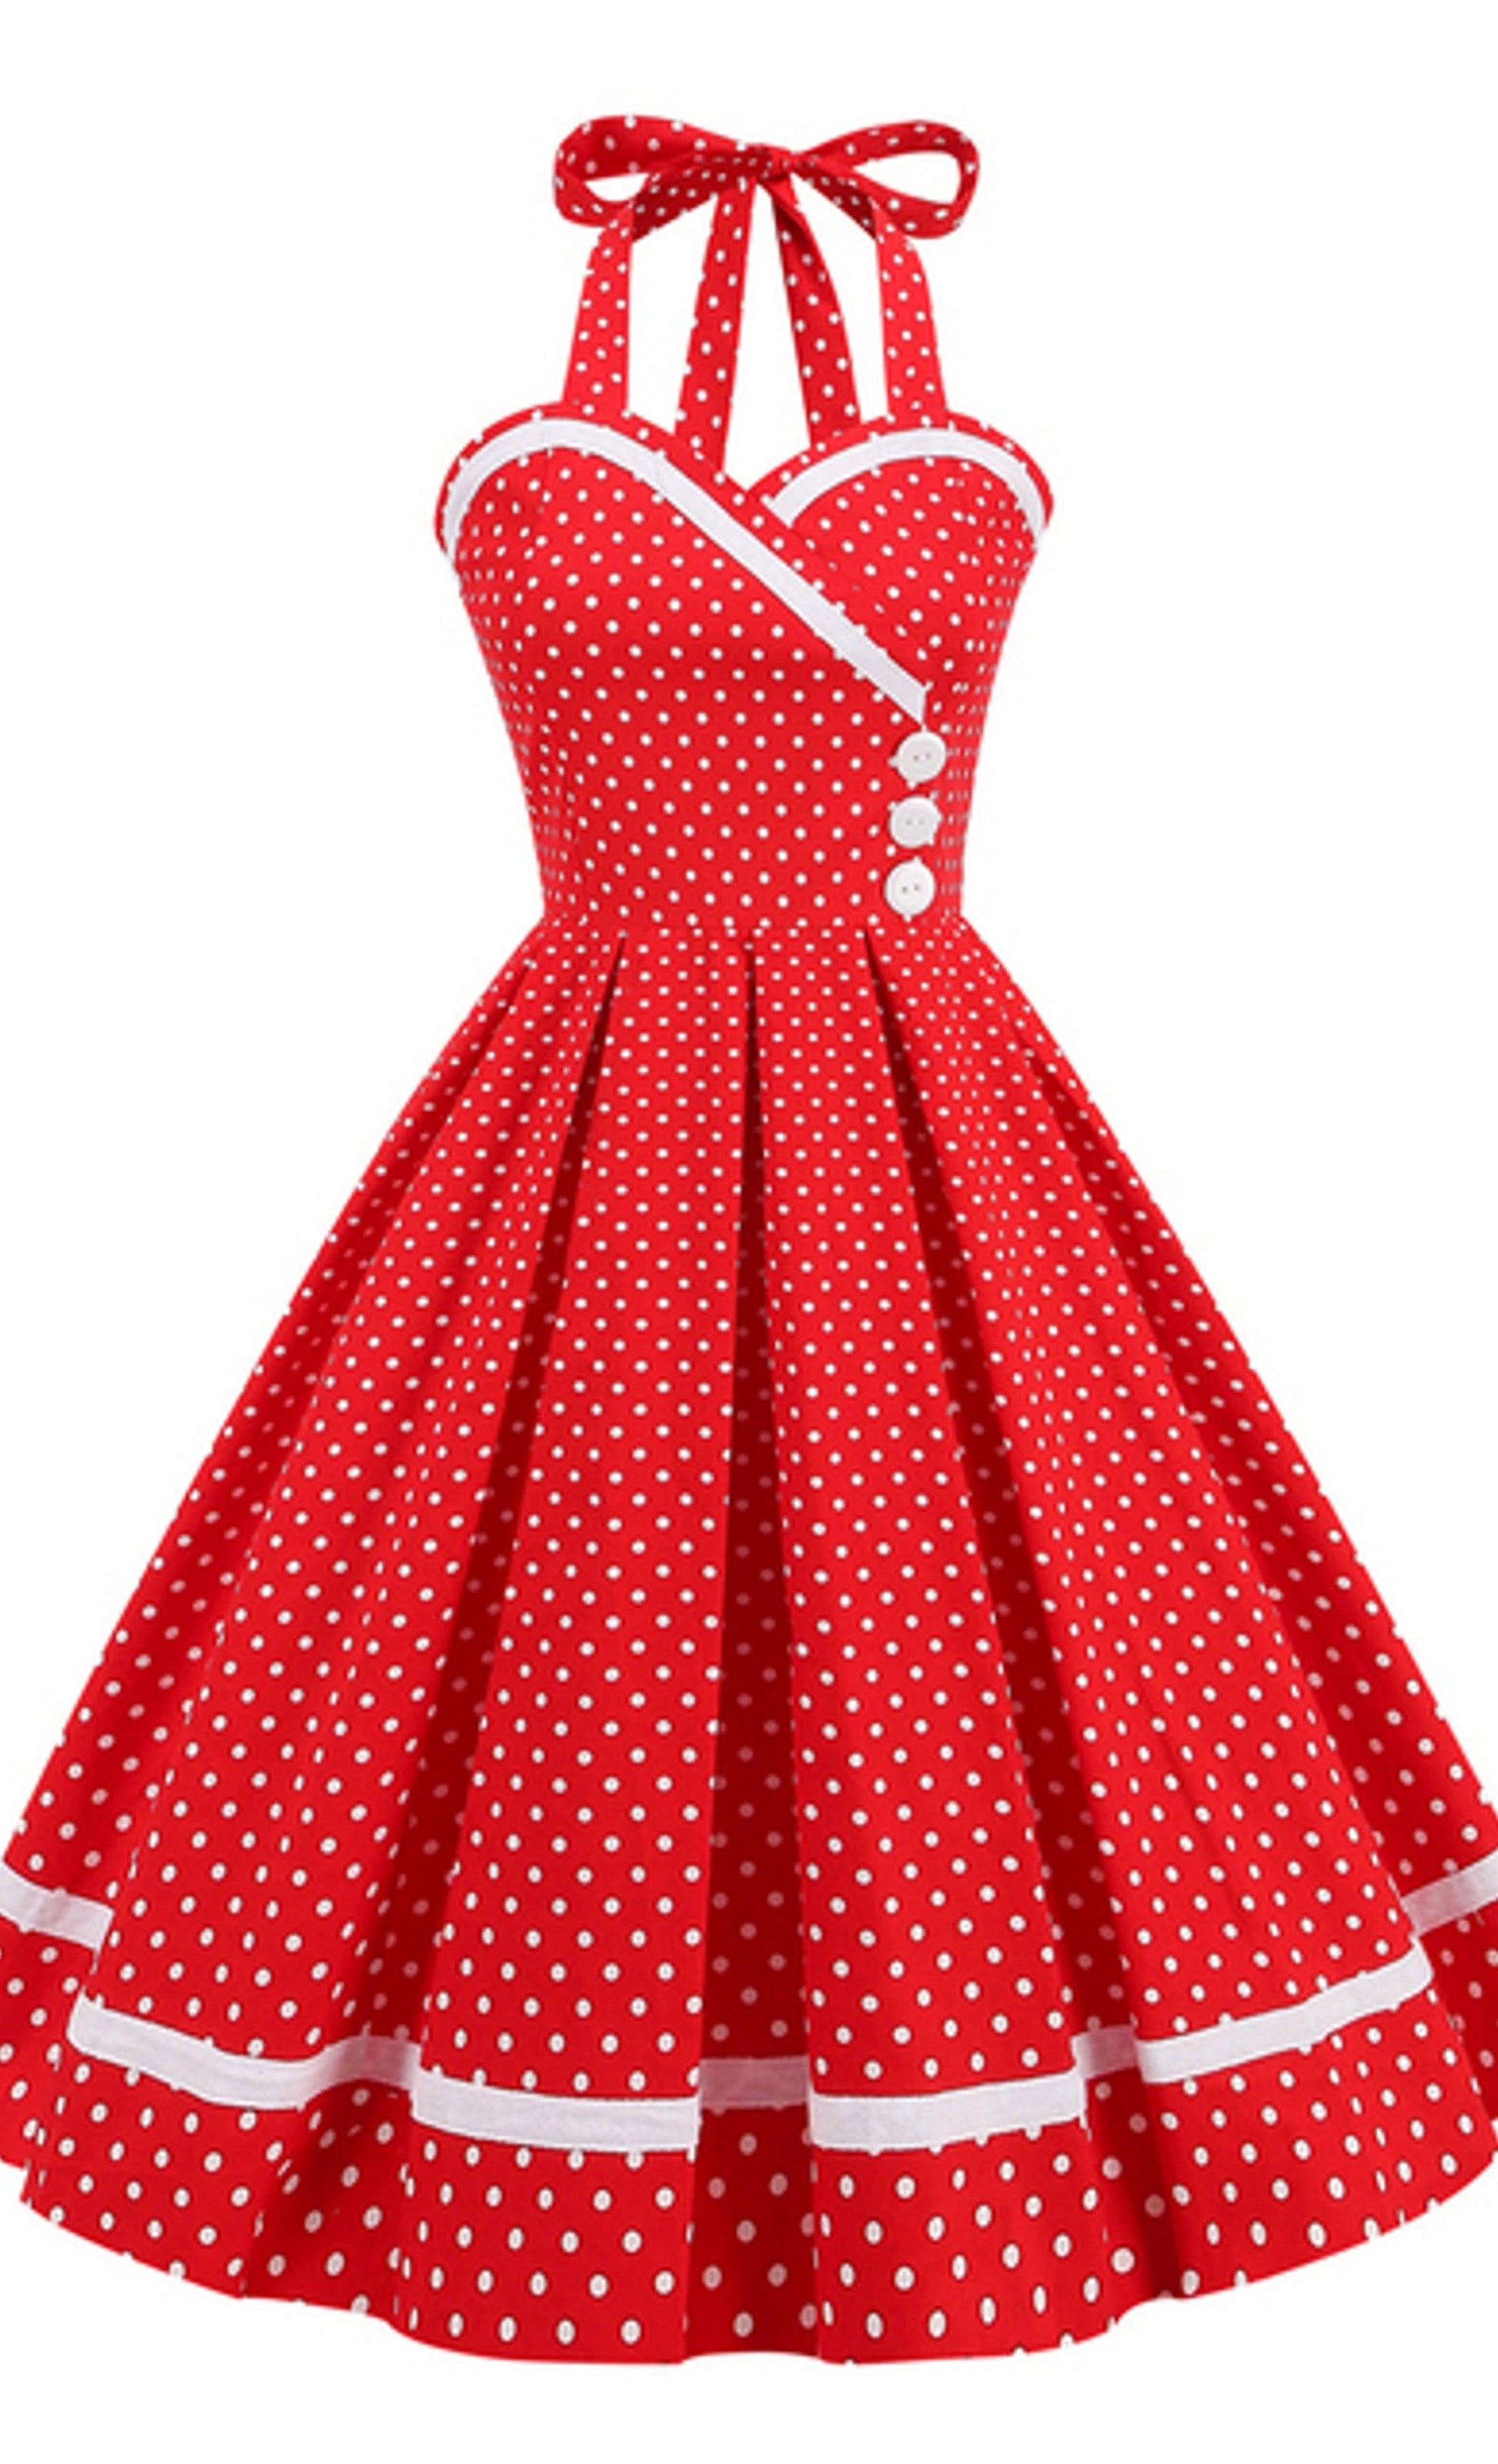 Vintage Summer Dress, Retro Midi Dress, Halter Neck Buttons Polka Dot Women Rockabilly Vintage Pleated Dress, Cotton Party Wear Ladies Dresses 1950s - Boldnaccs By Artisans